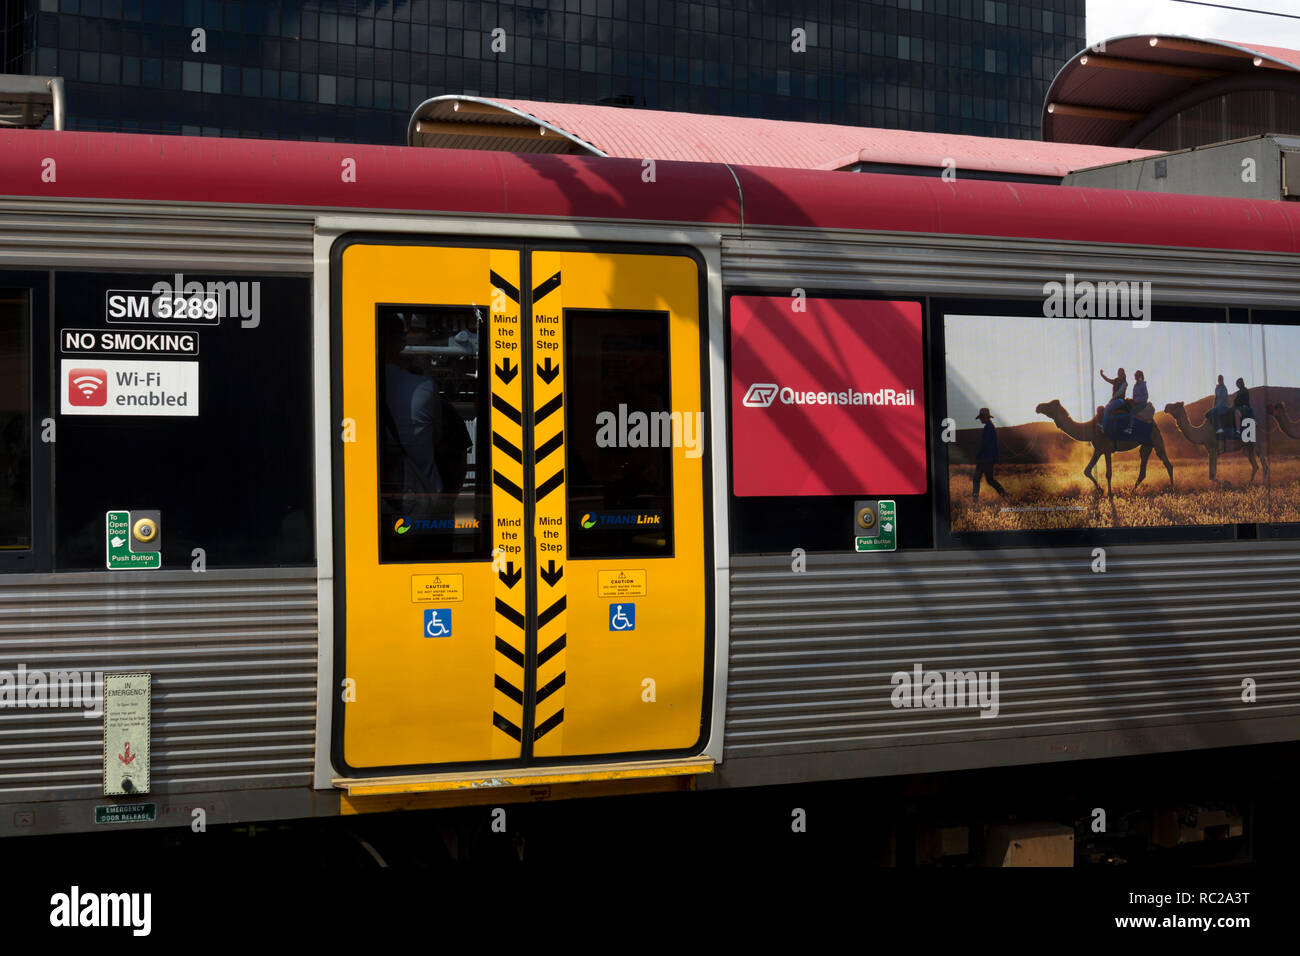 Queensland Rail train detail with Wi-Fi enabled sign, Brisbane, Queensland, Australia Stock Photo